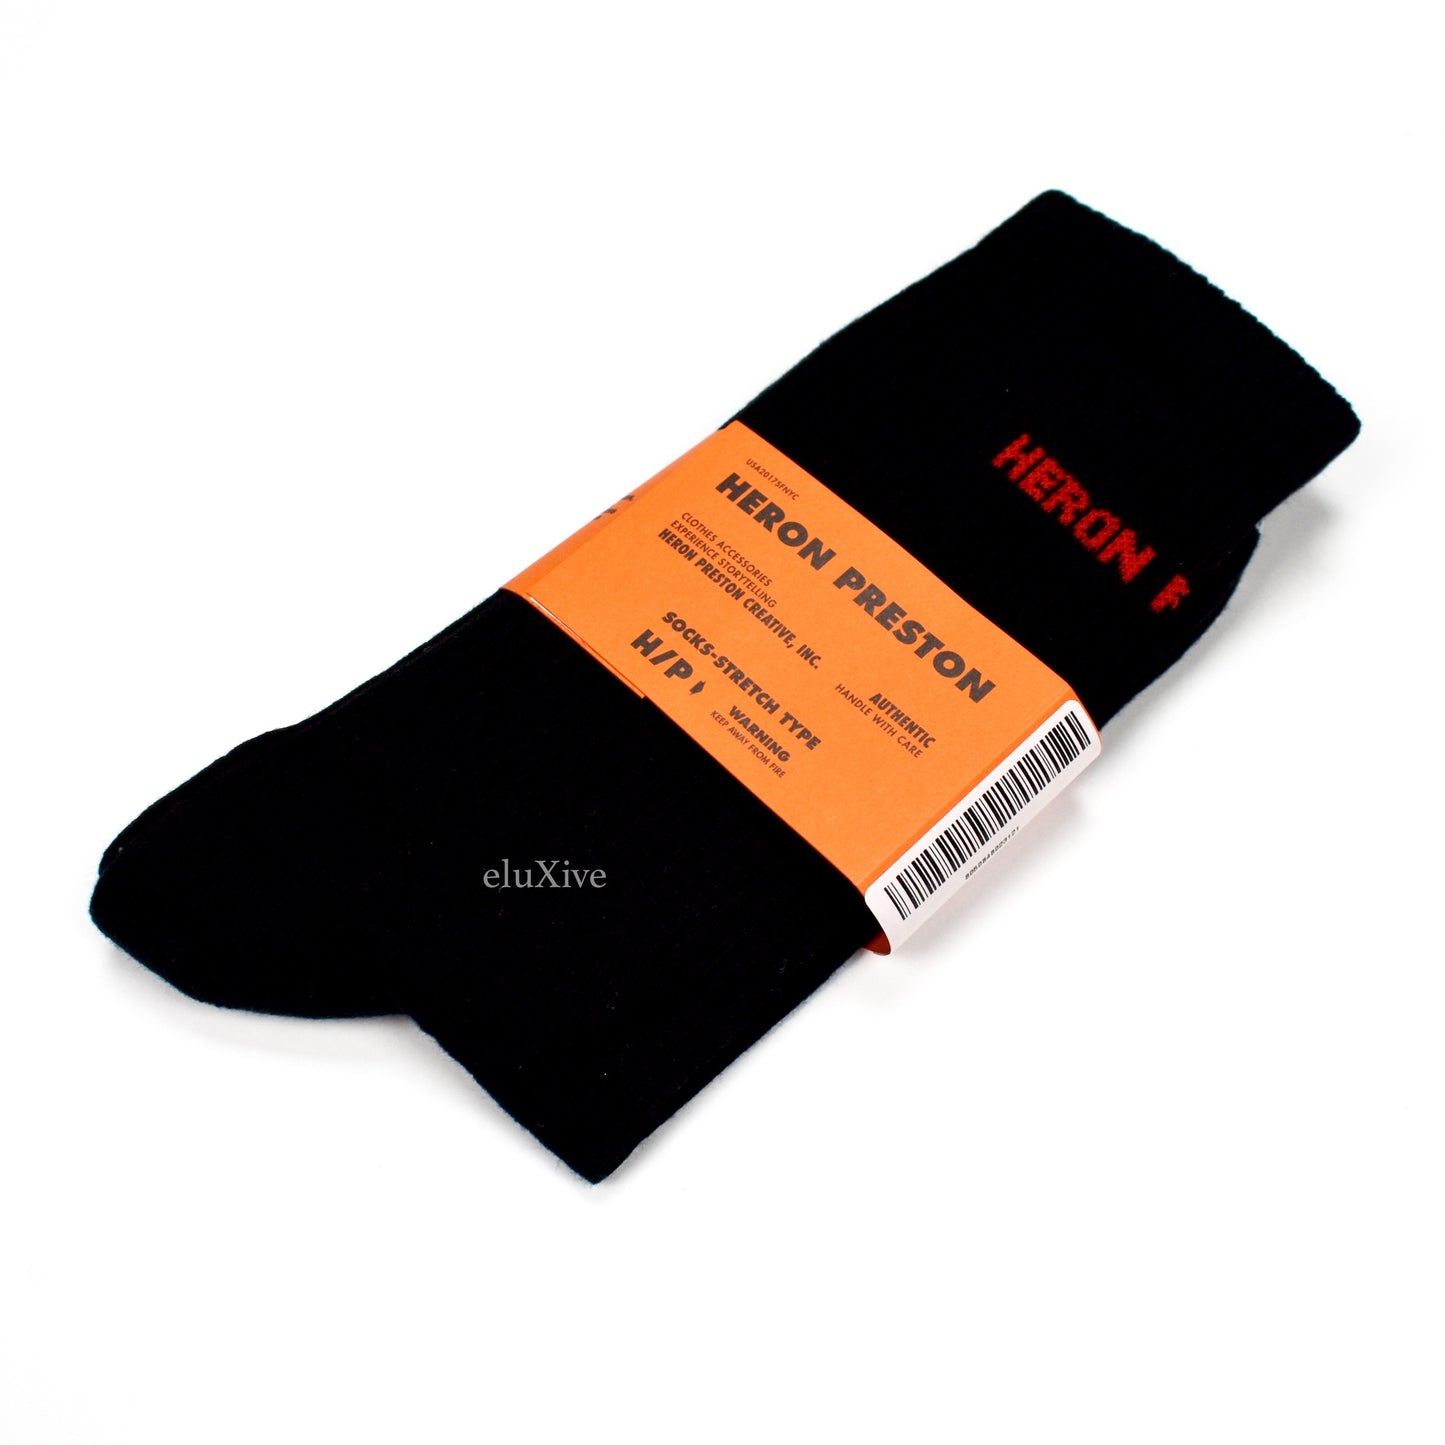 Heron Preston - Black Logo Knit Socks